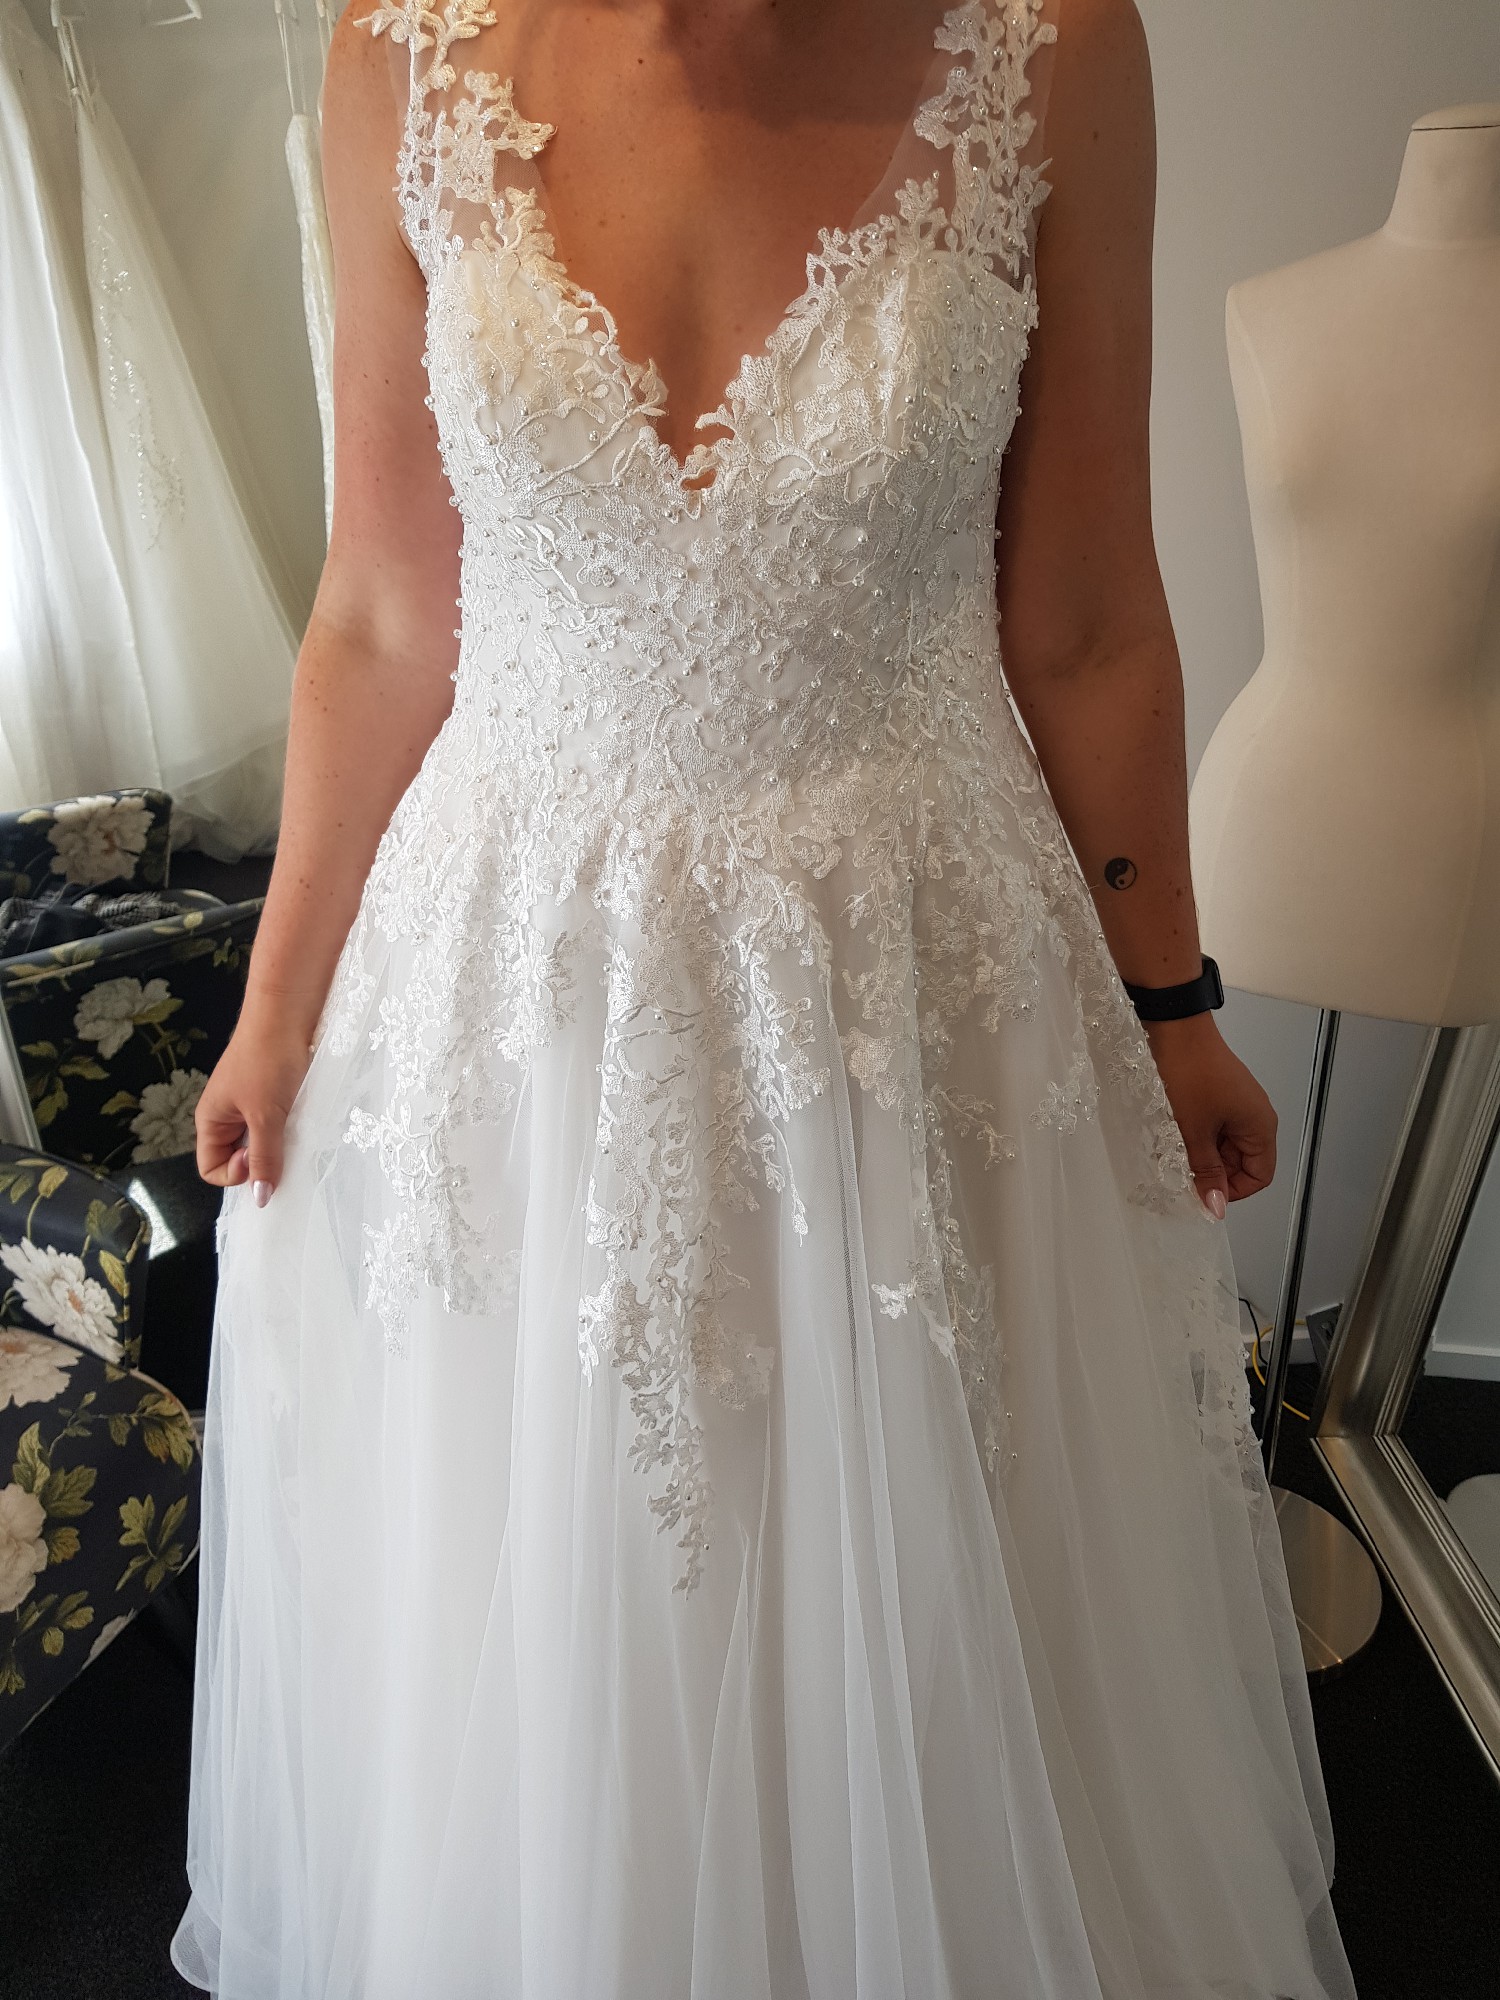 Kaia Elle Bridal Liza New Wedding Dress Save 75% - Stillwhite